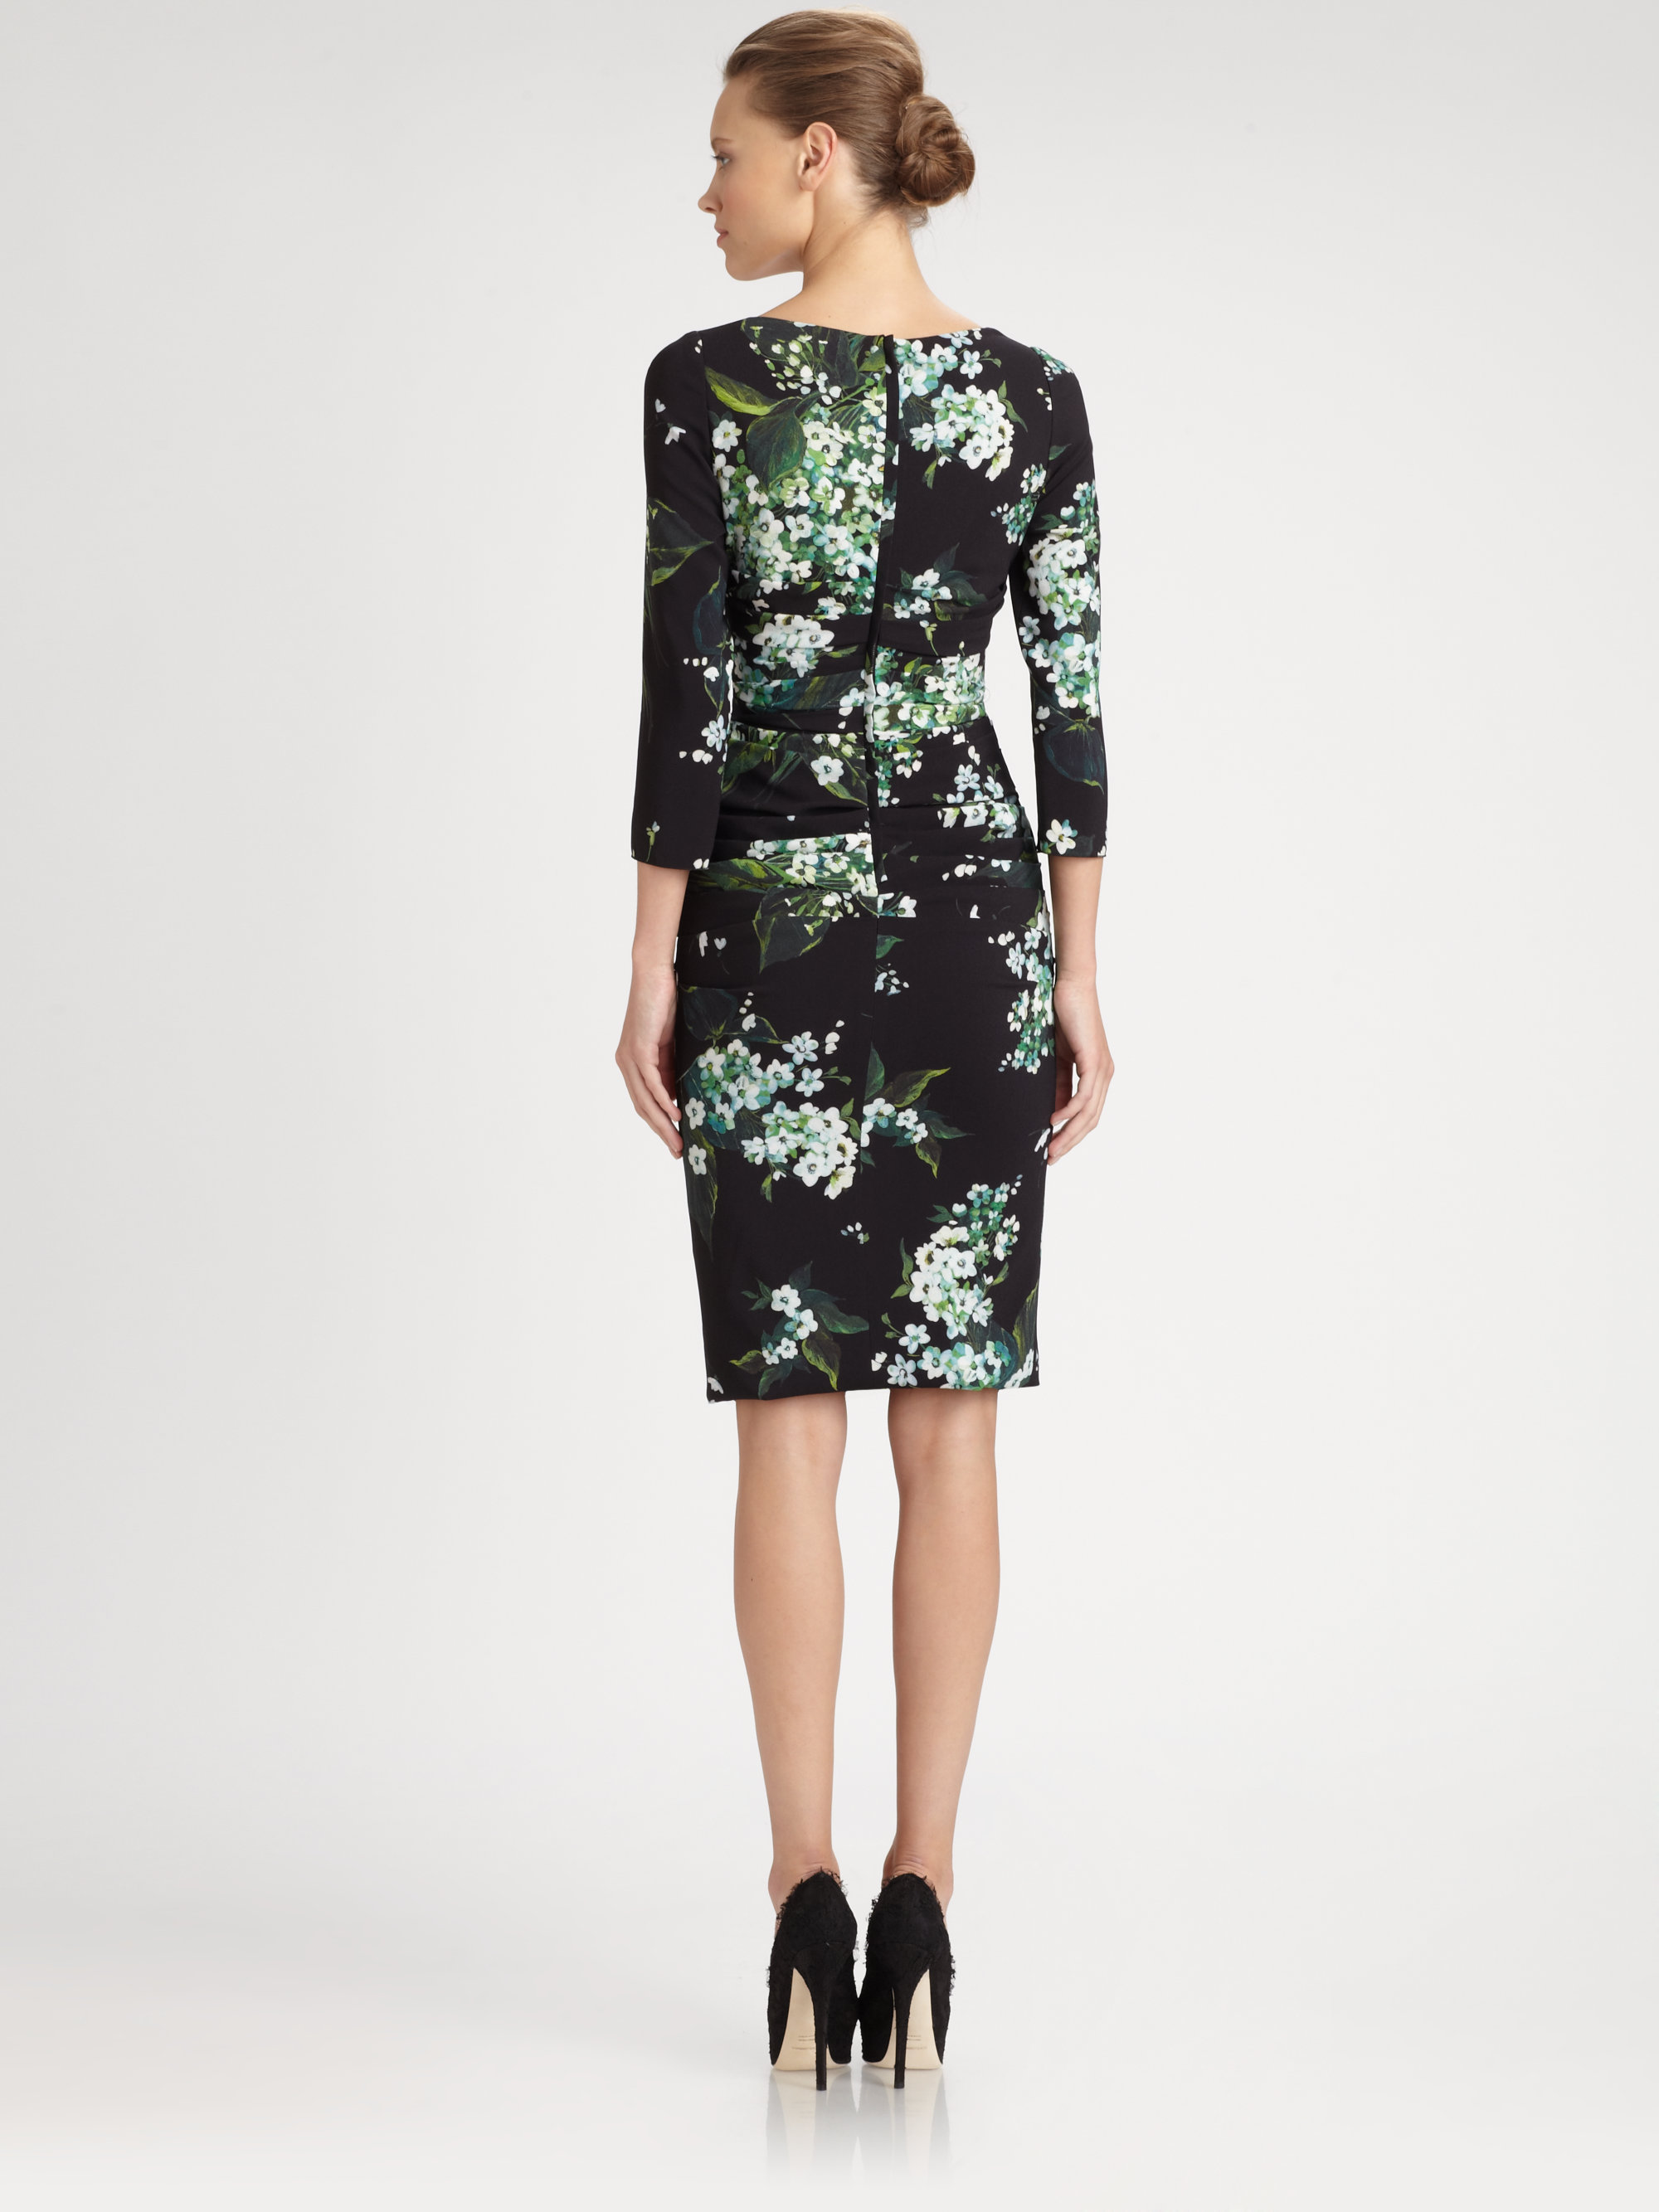 Dolce & Gabbana Lily Print Dress in Black - Lyst